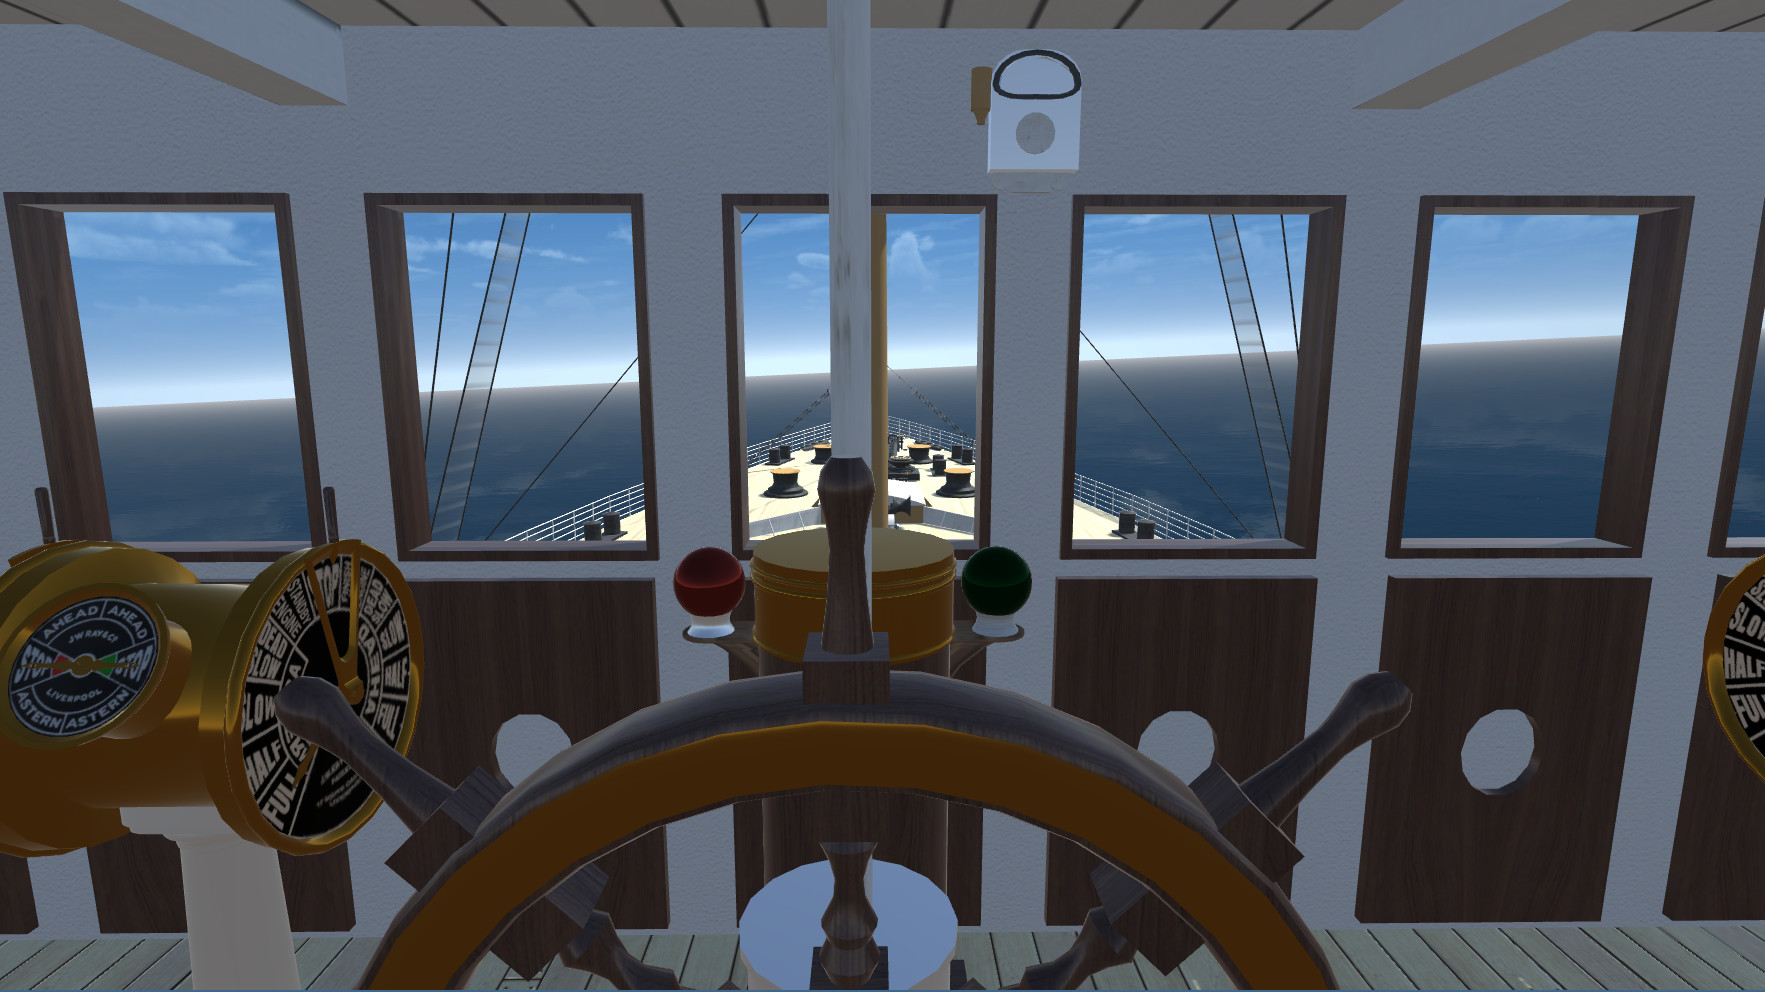 Britannic On Steam - roblox titanic svenska